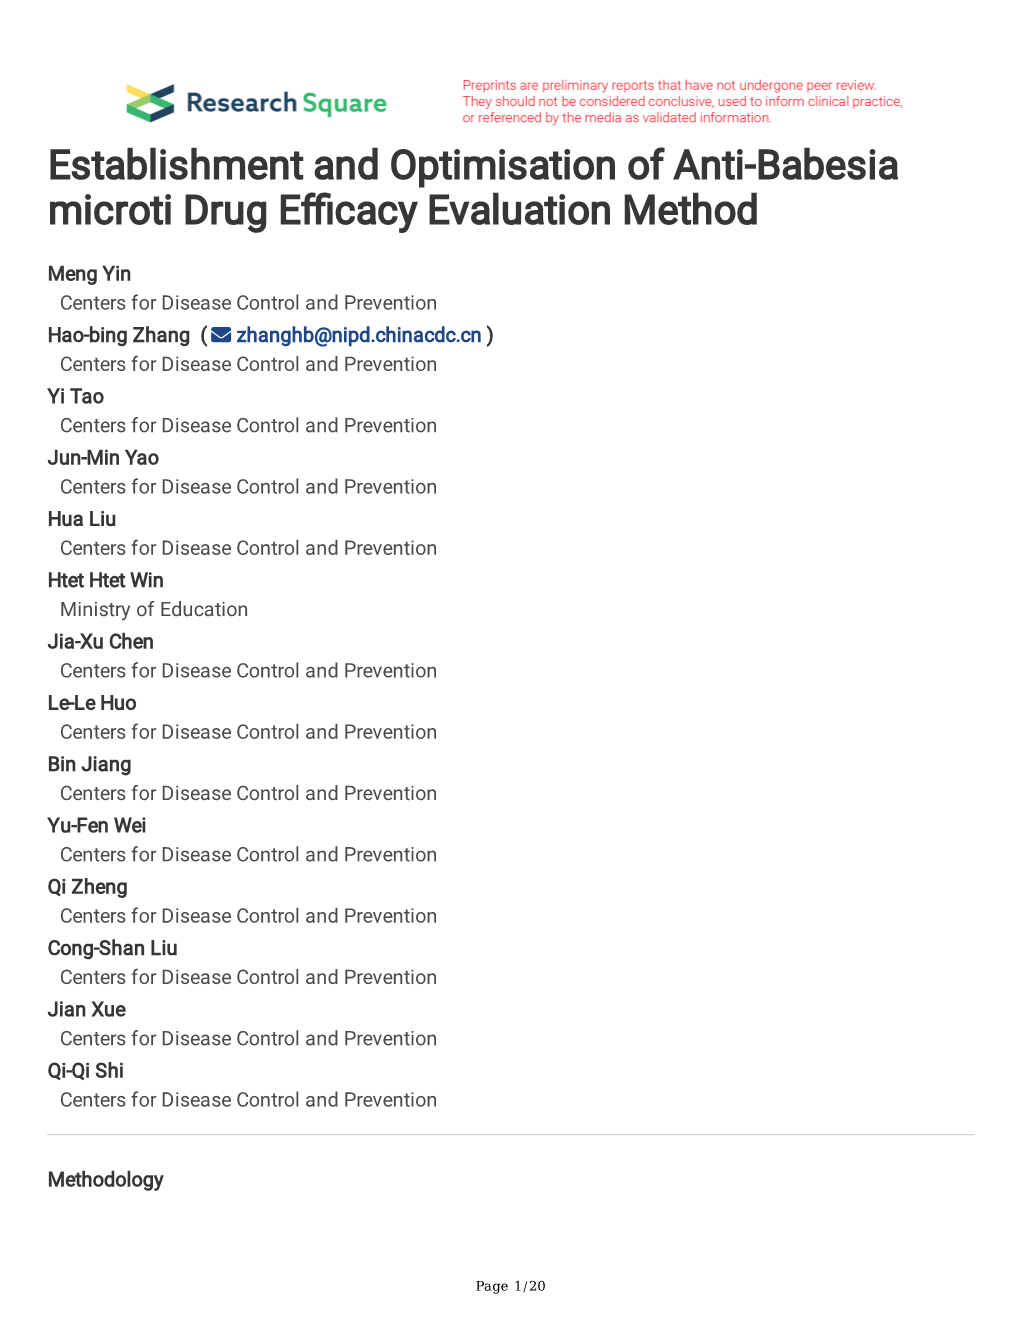 Establishment and Optimisation of Anti-Babesia Microti Drug E Cacy